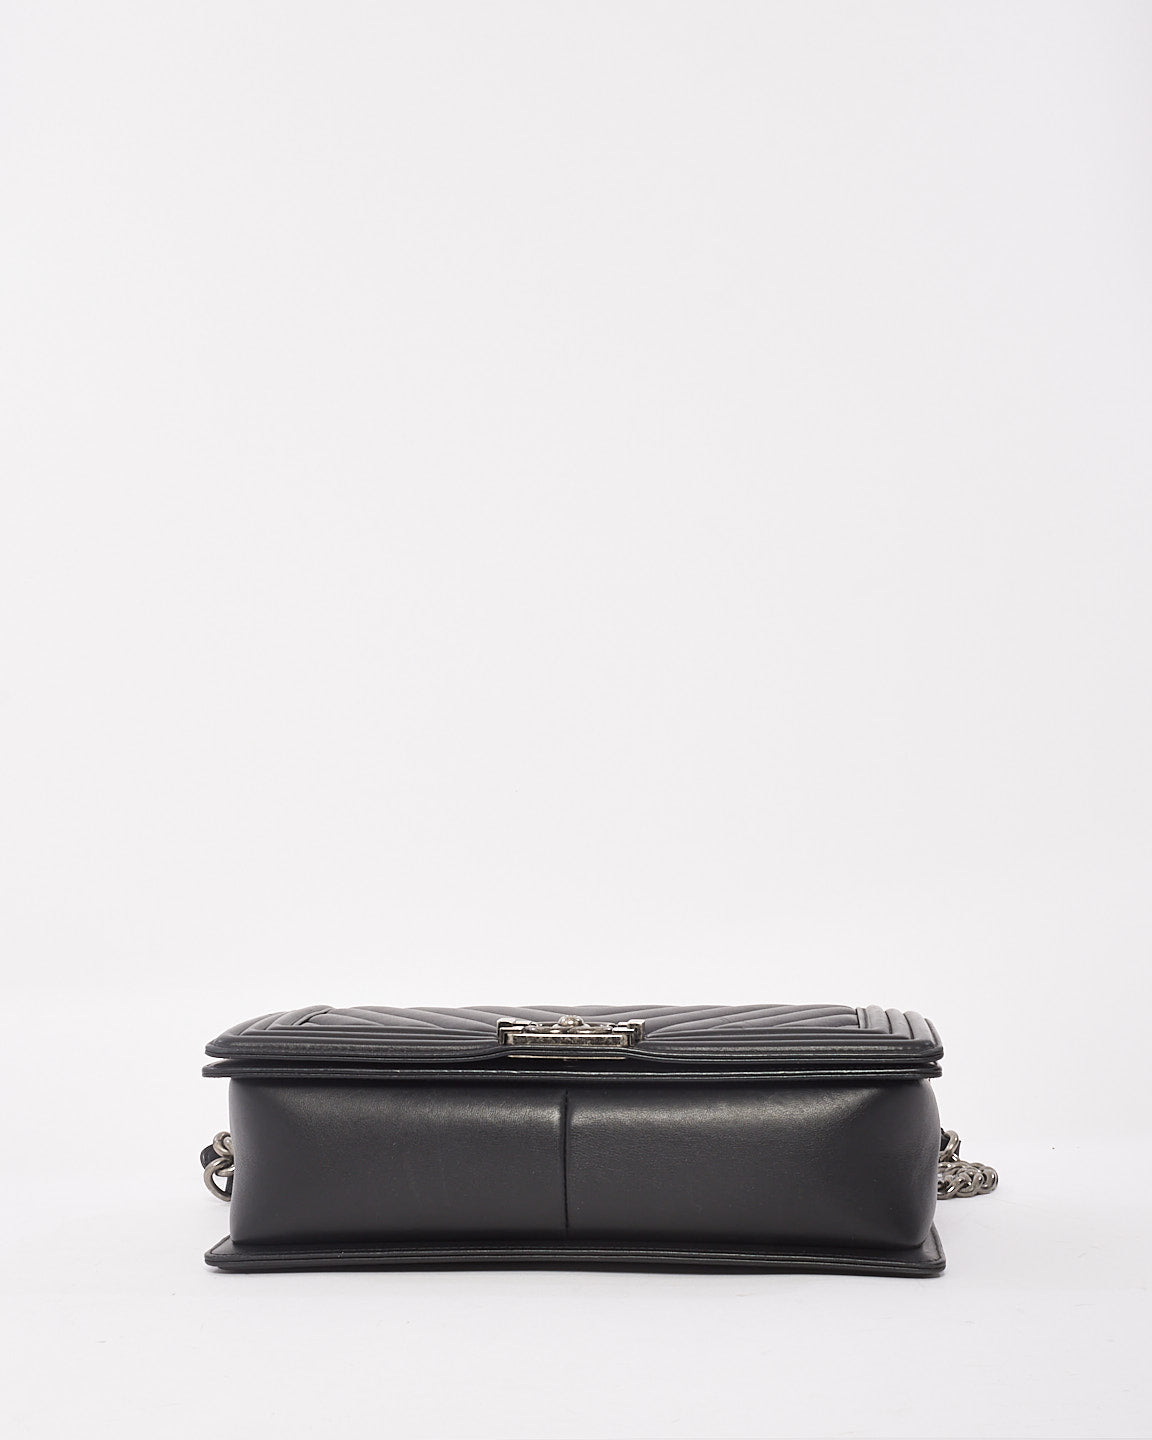 Chanel Black Chevron Leather Old Medium Boy Bag